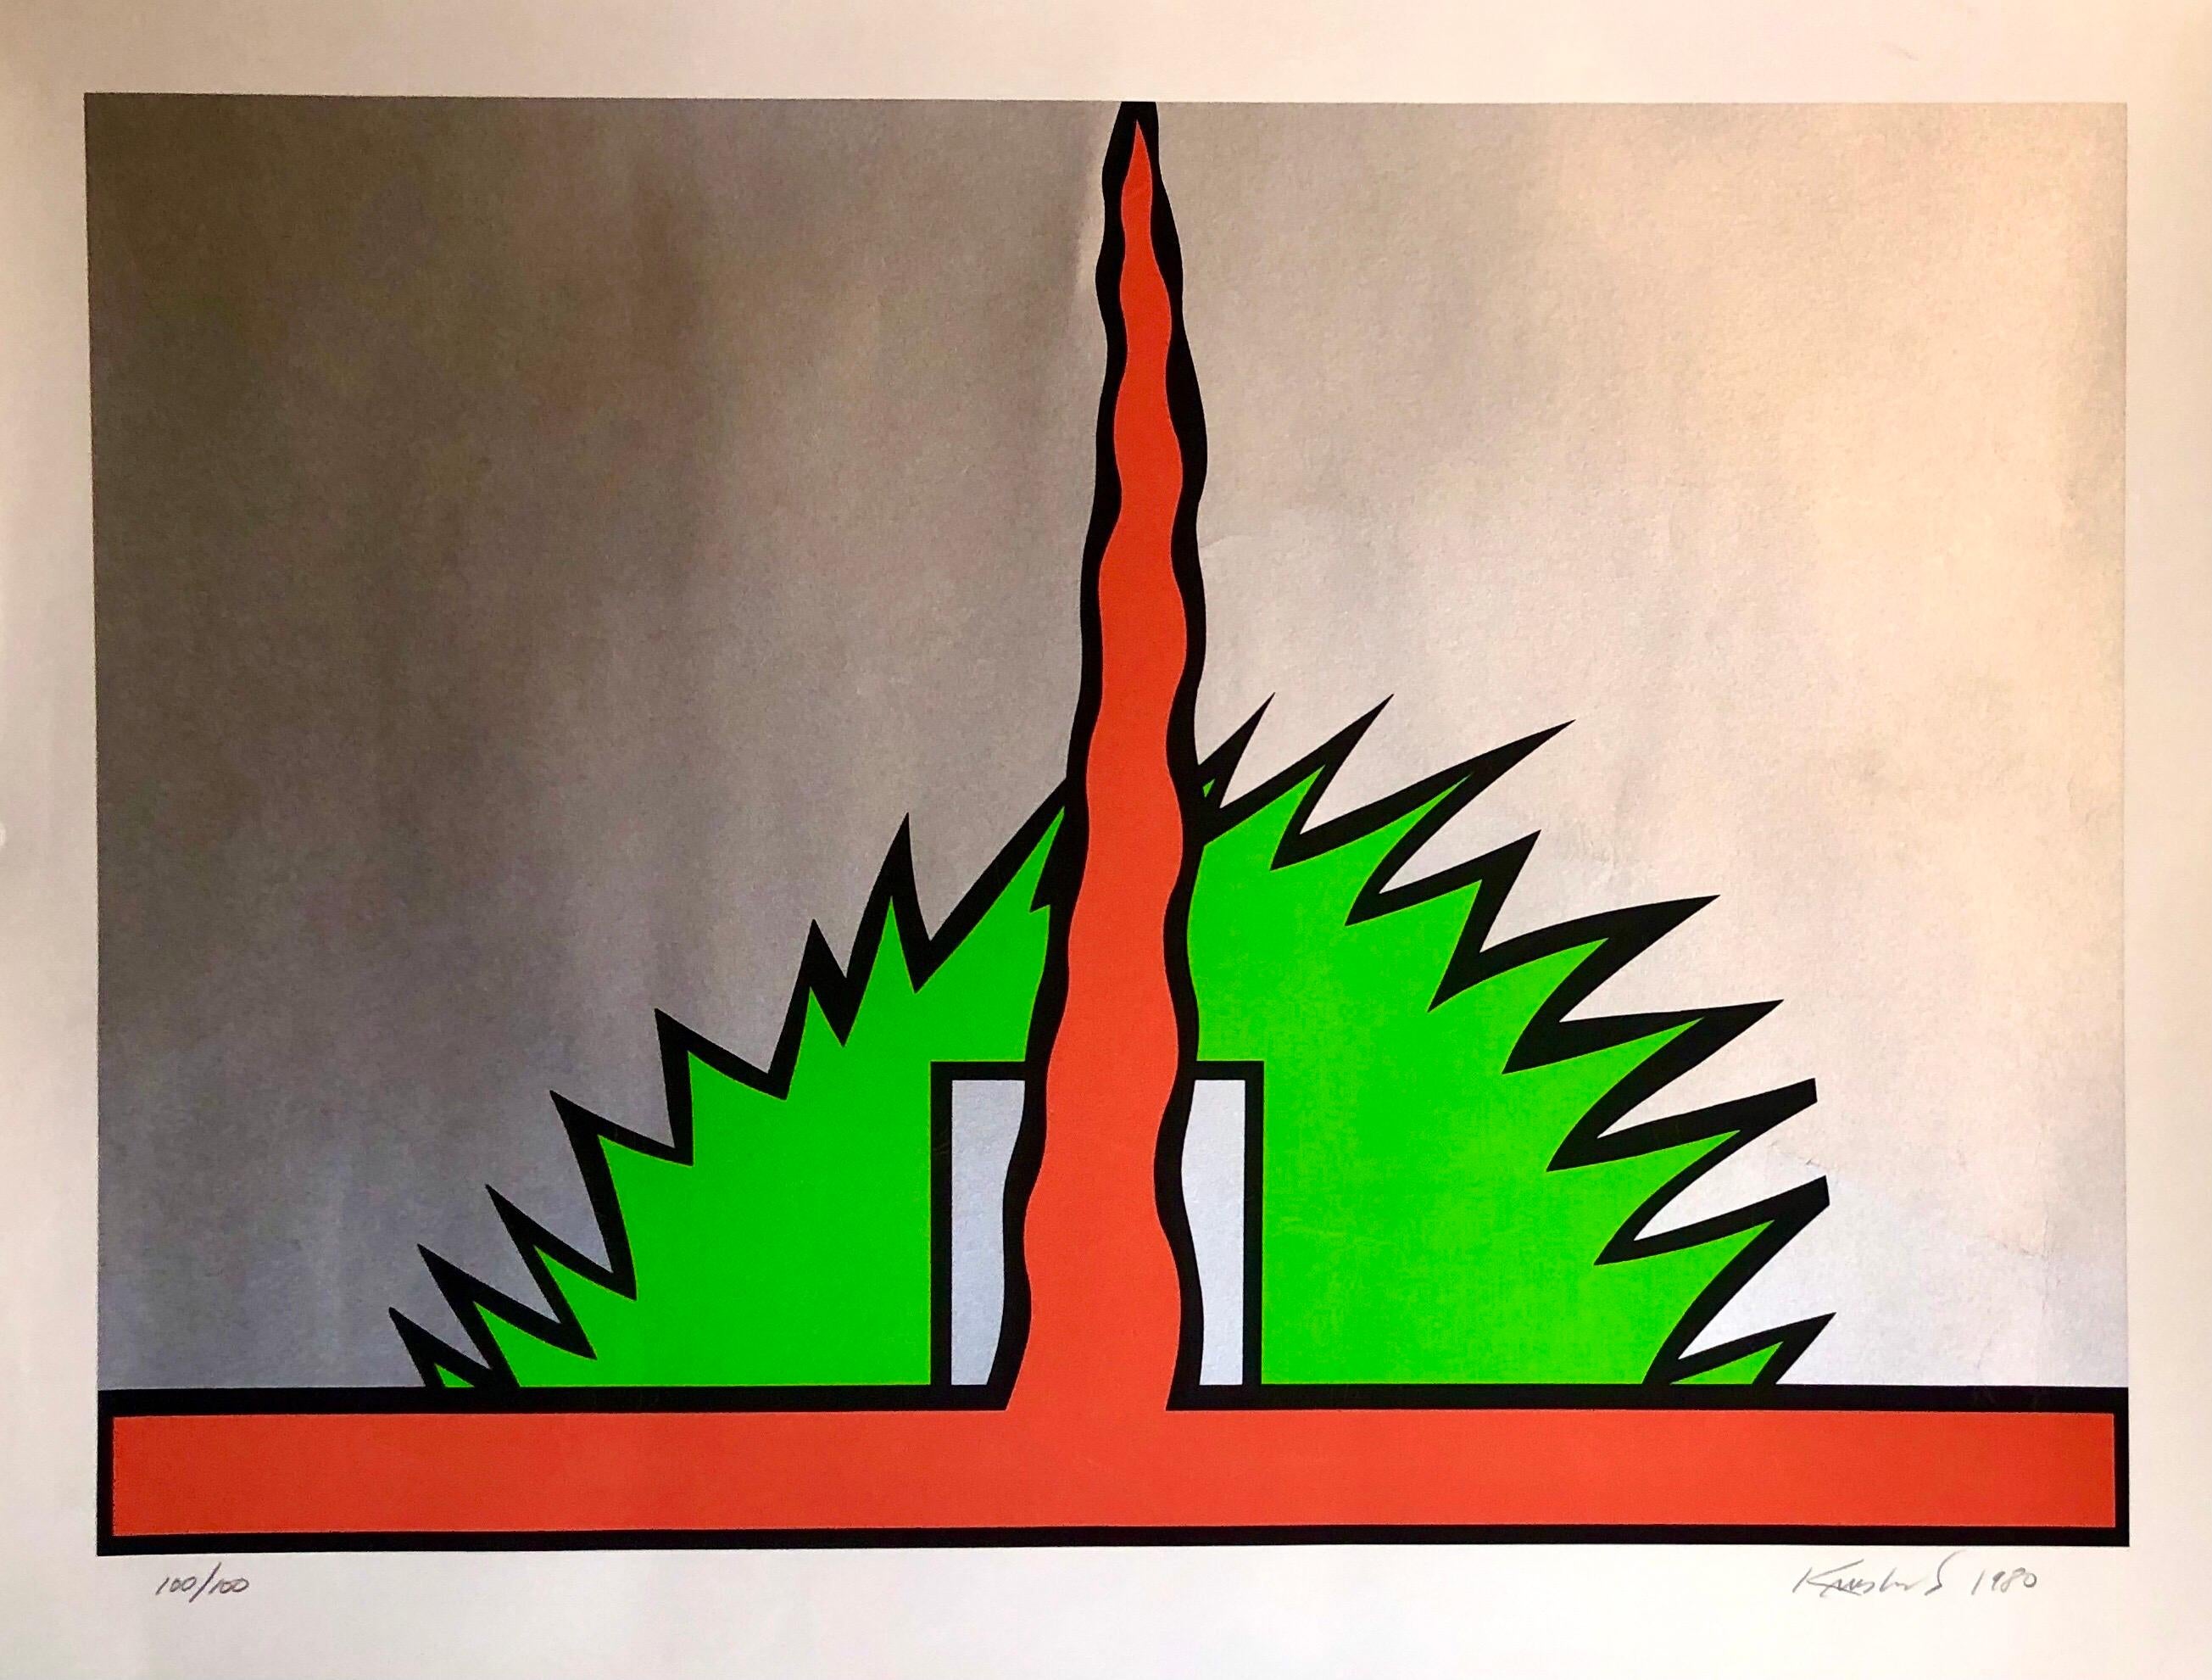 Nicholas Krushenick Abstract Print - 1980 Large Pop Art Silkscreen Abstract Op Art Jagged Edge Bright Color Serigraph